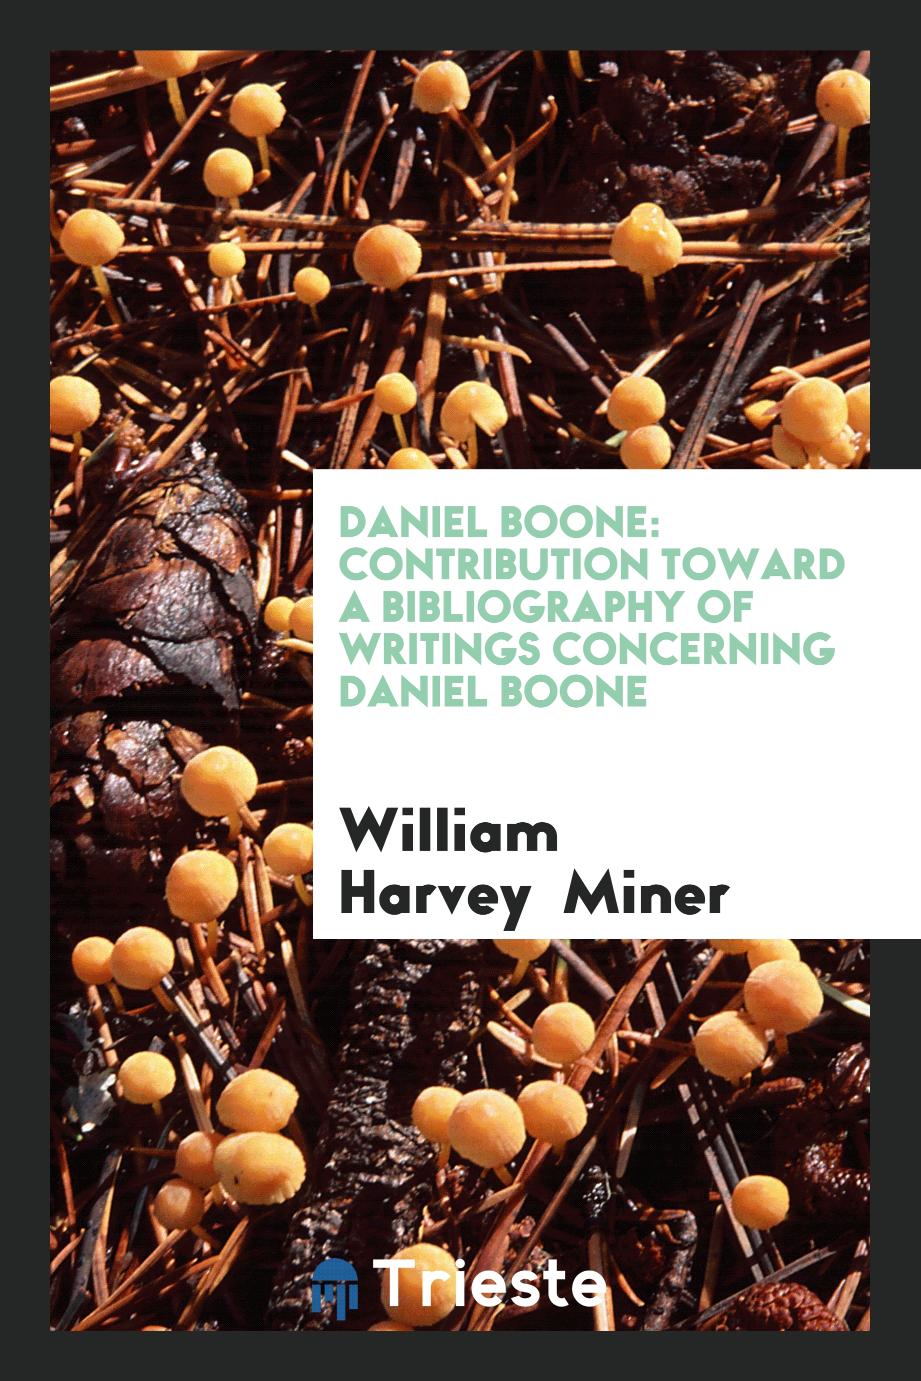 Daniel Boone: Contribution Toward a Bibliography of Writings Concerning Daniel Boone